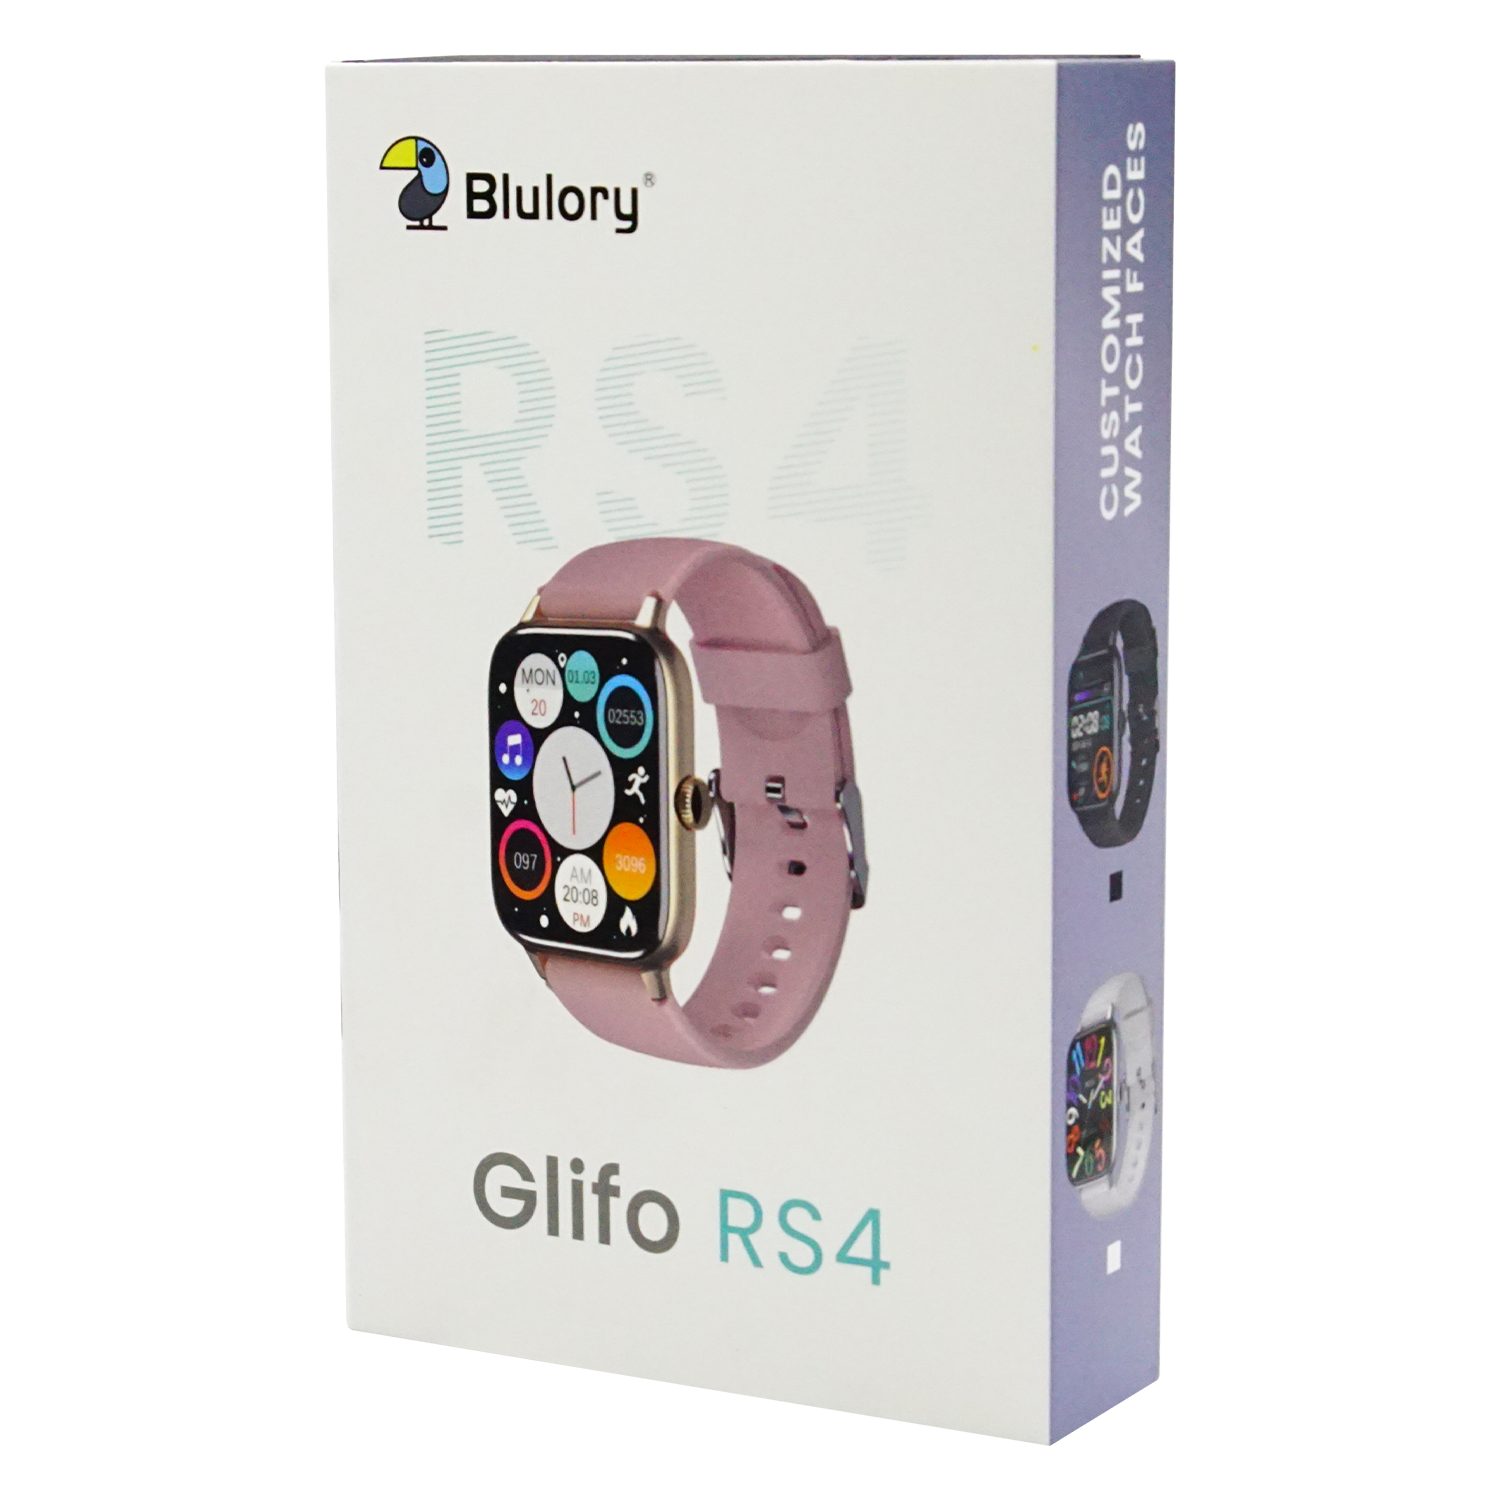 Smartwatch Blulory Glifo RS4 45mm - Rosa